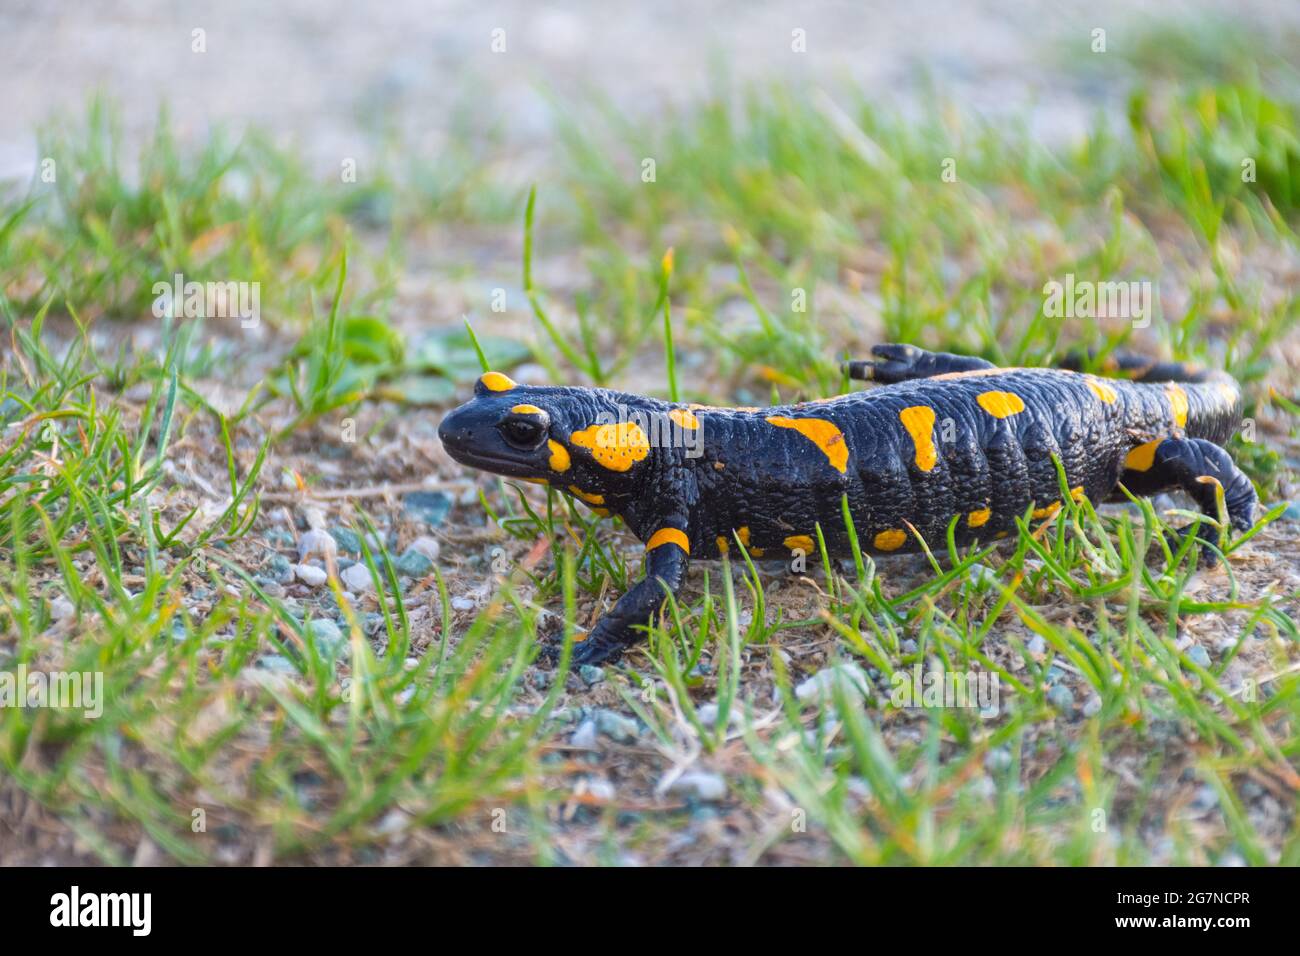 European fire salamander (Salamandra salamandra), a black yellow spotted amphibian in its natural habitat Stock Photo